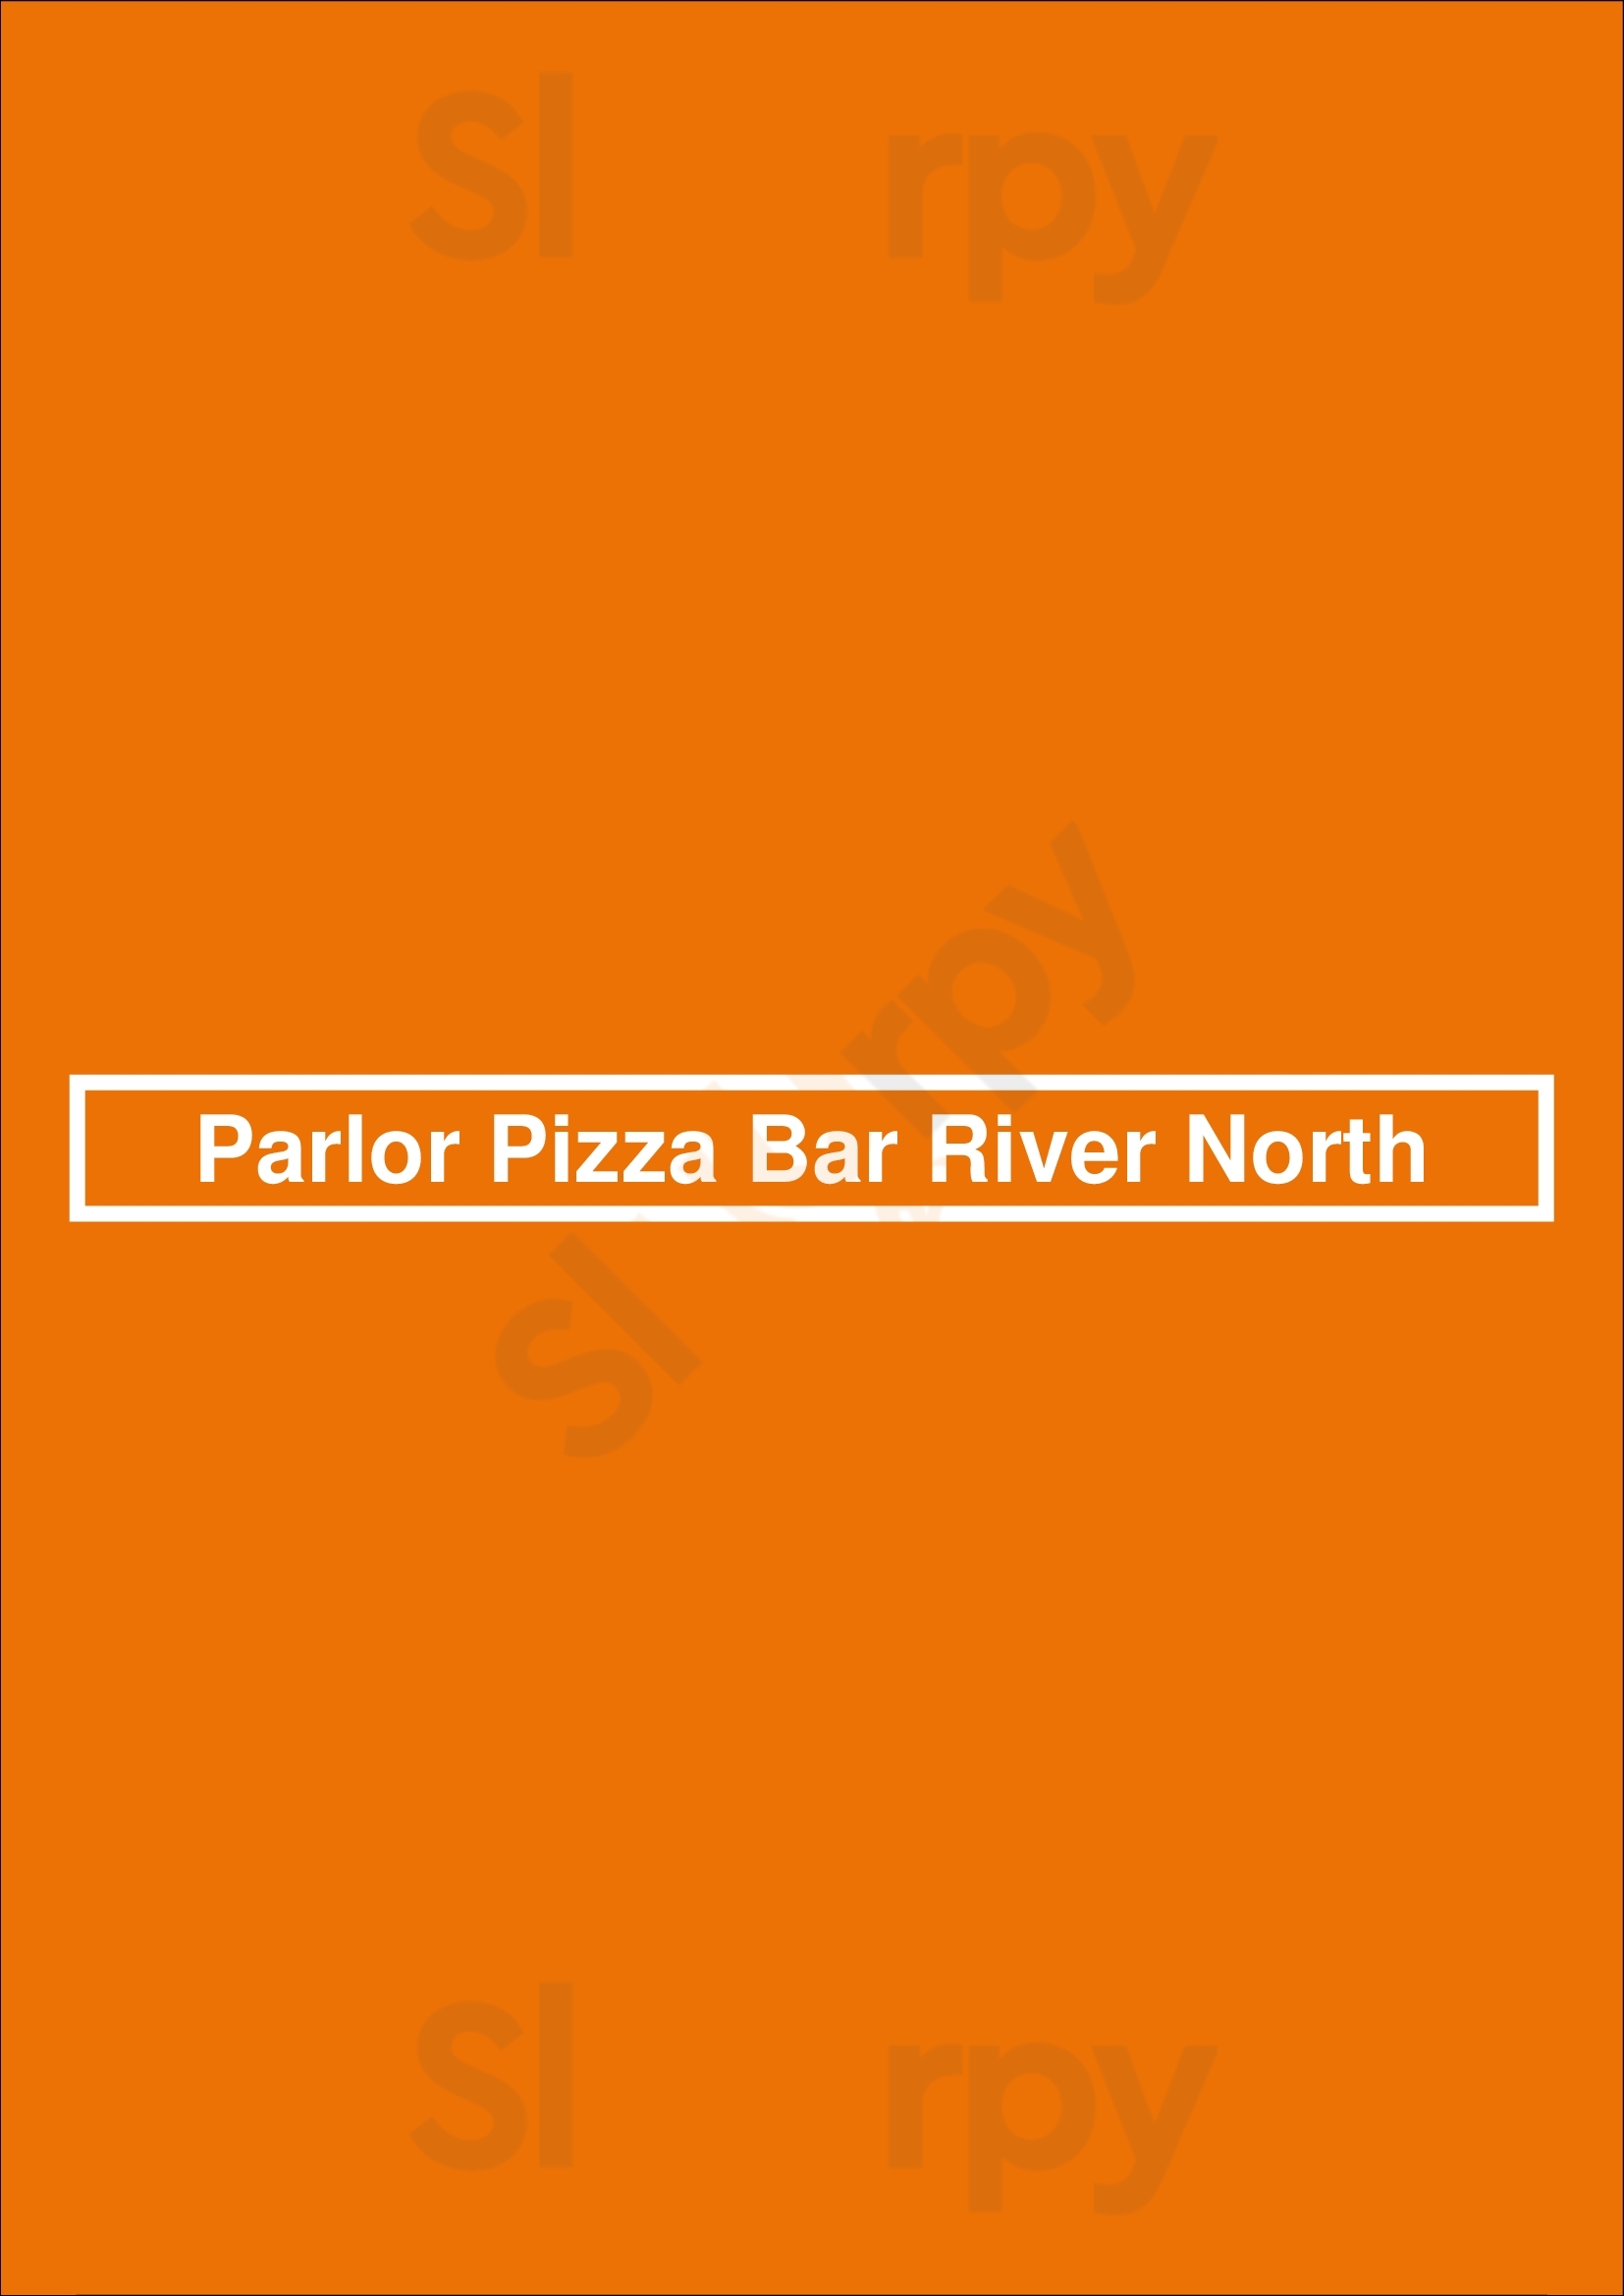 Parlor Pizza Bar River North Chicago Menu - 1